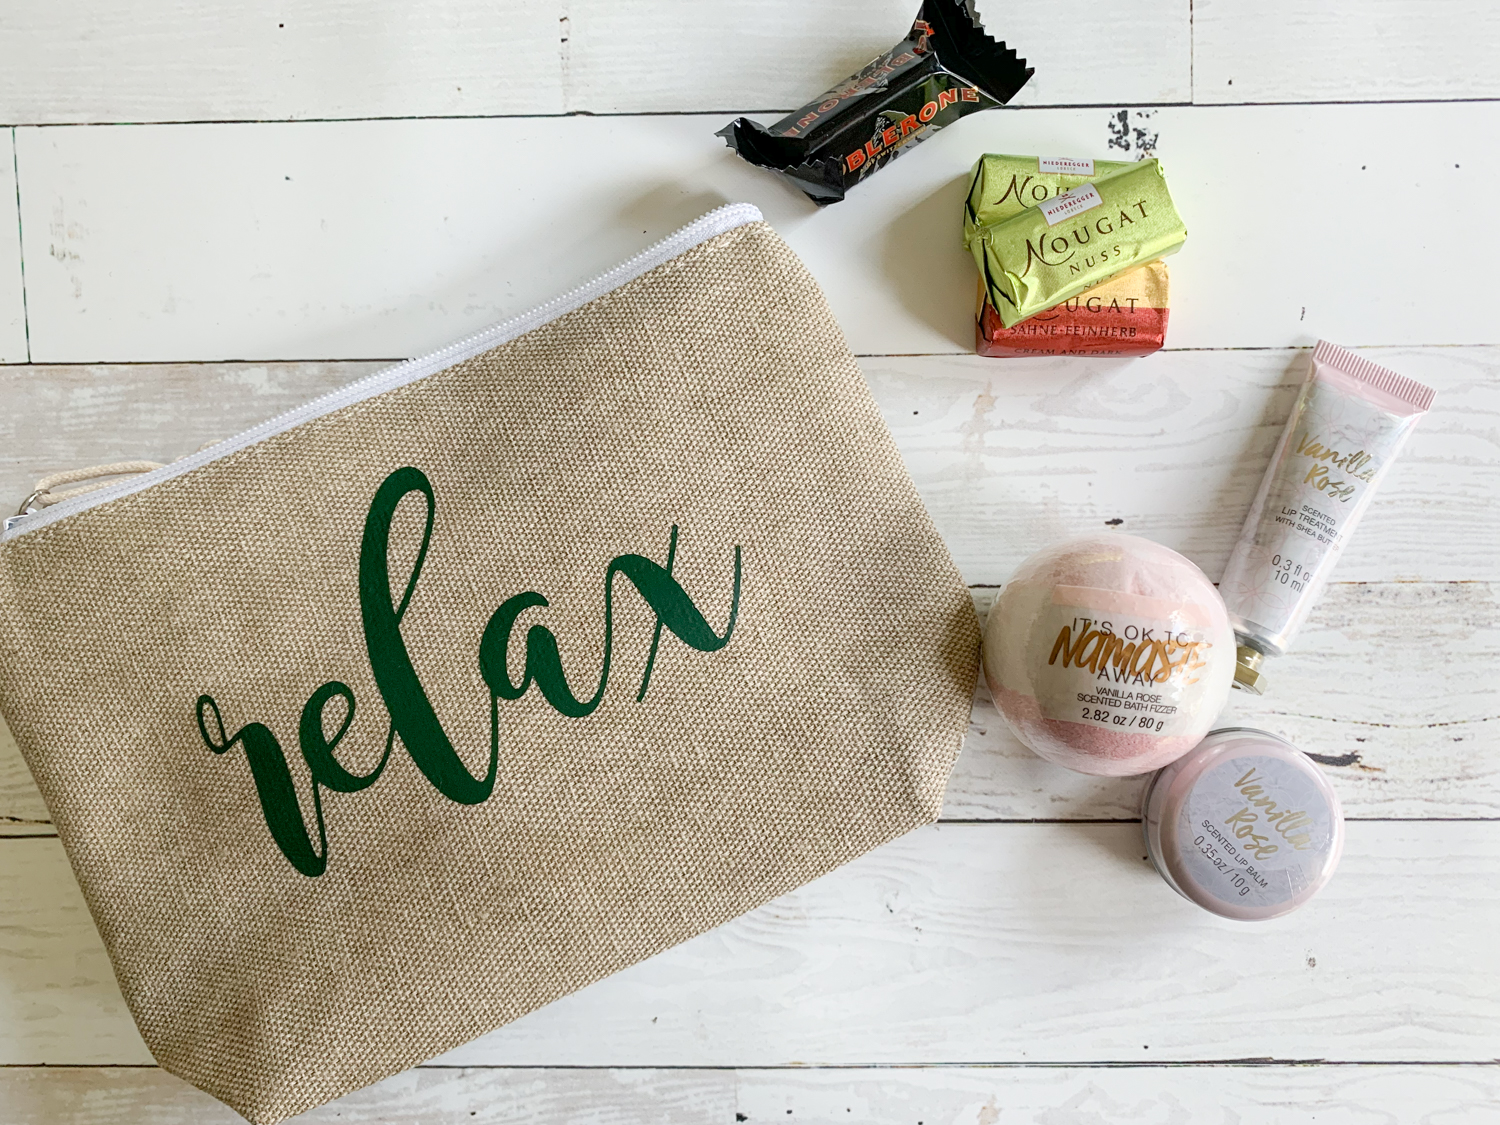 Relax Cosmetics Bag, Bath Bomb, Candies, Lotion